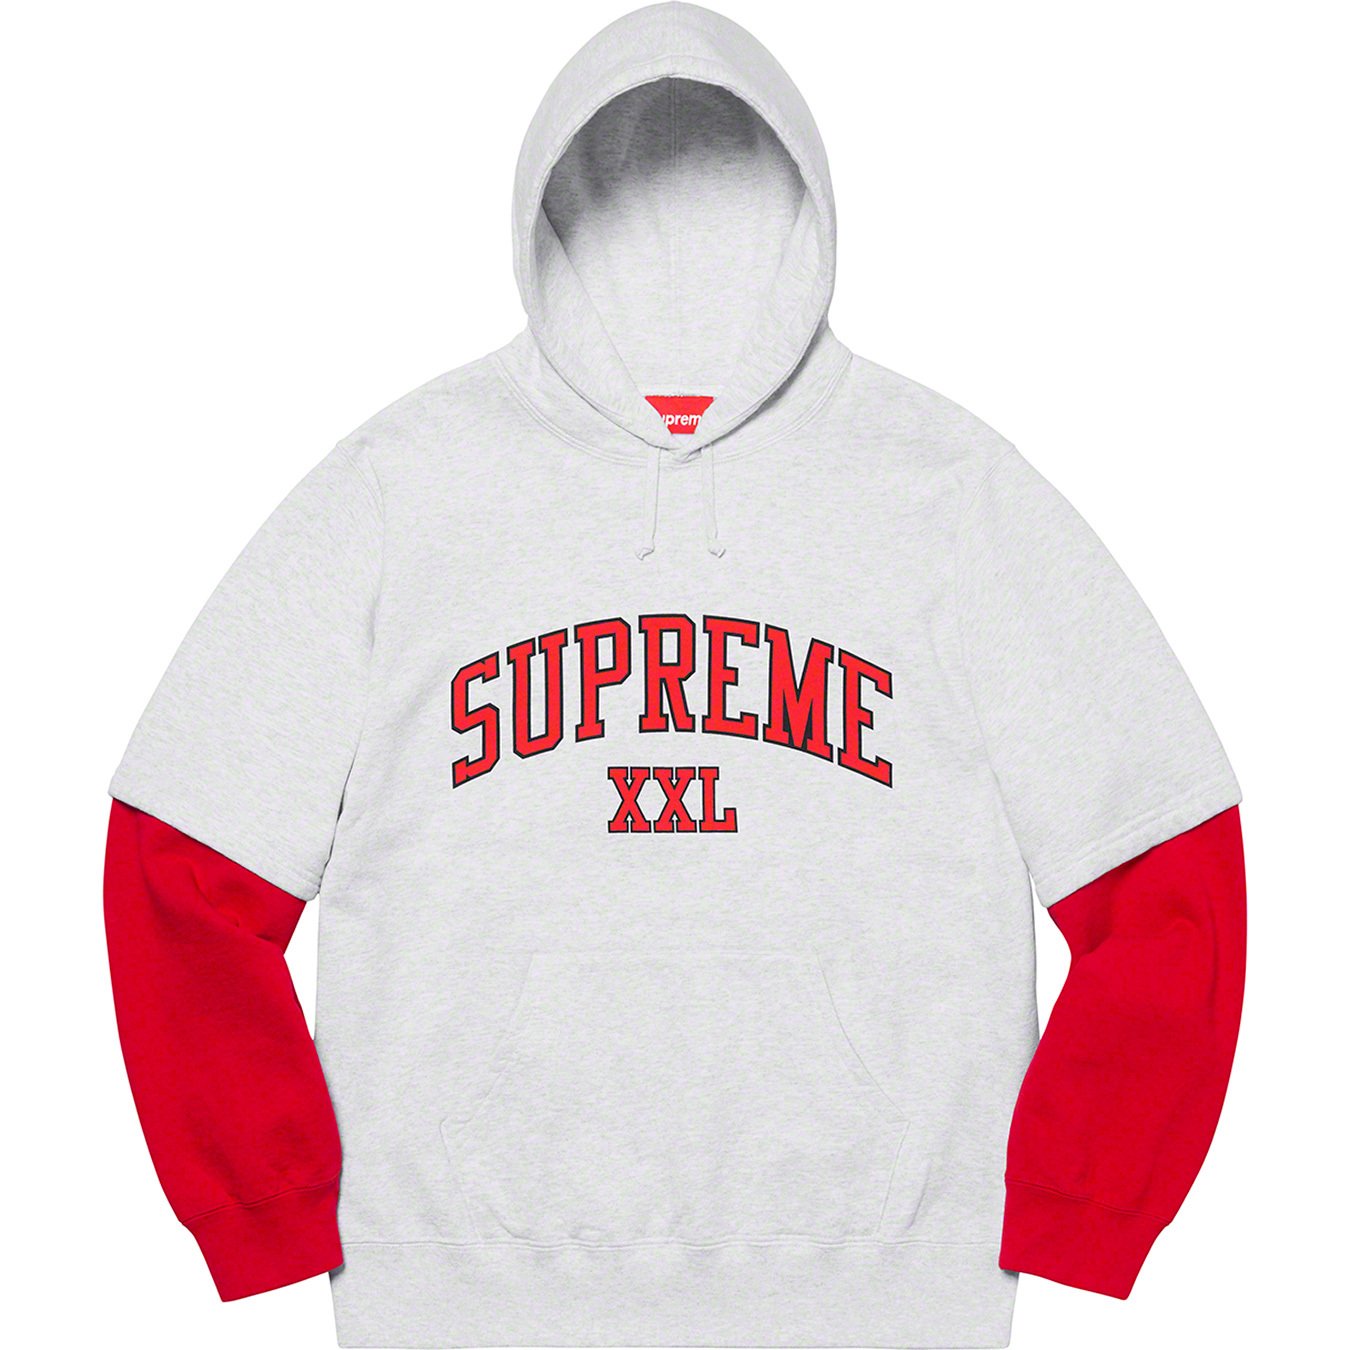 XXL Hooded Sweatshirt - Supreme Community